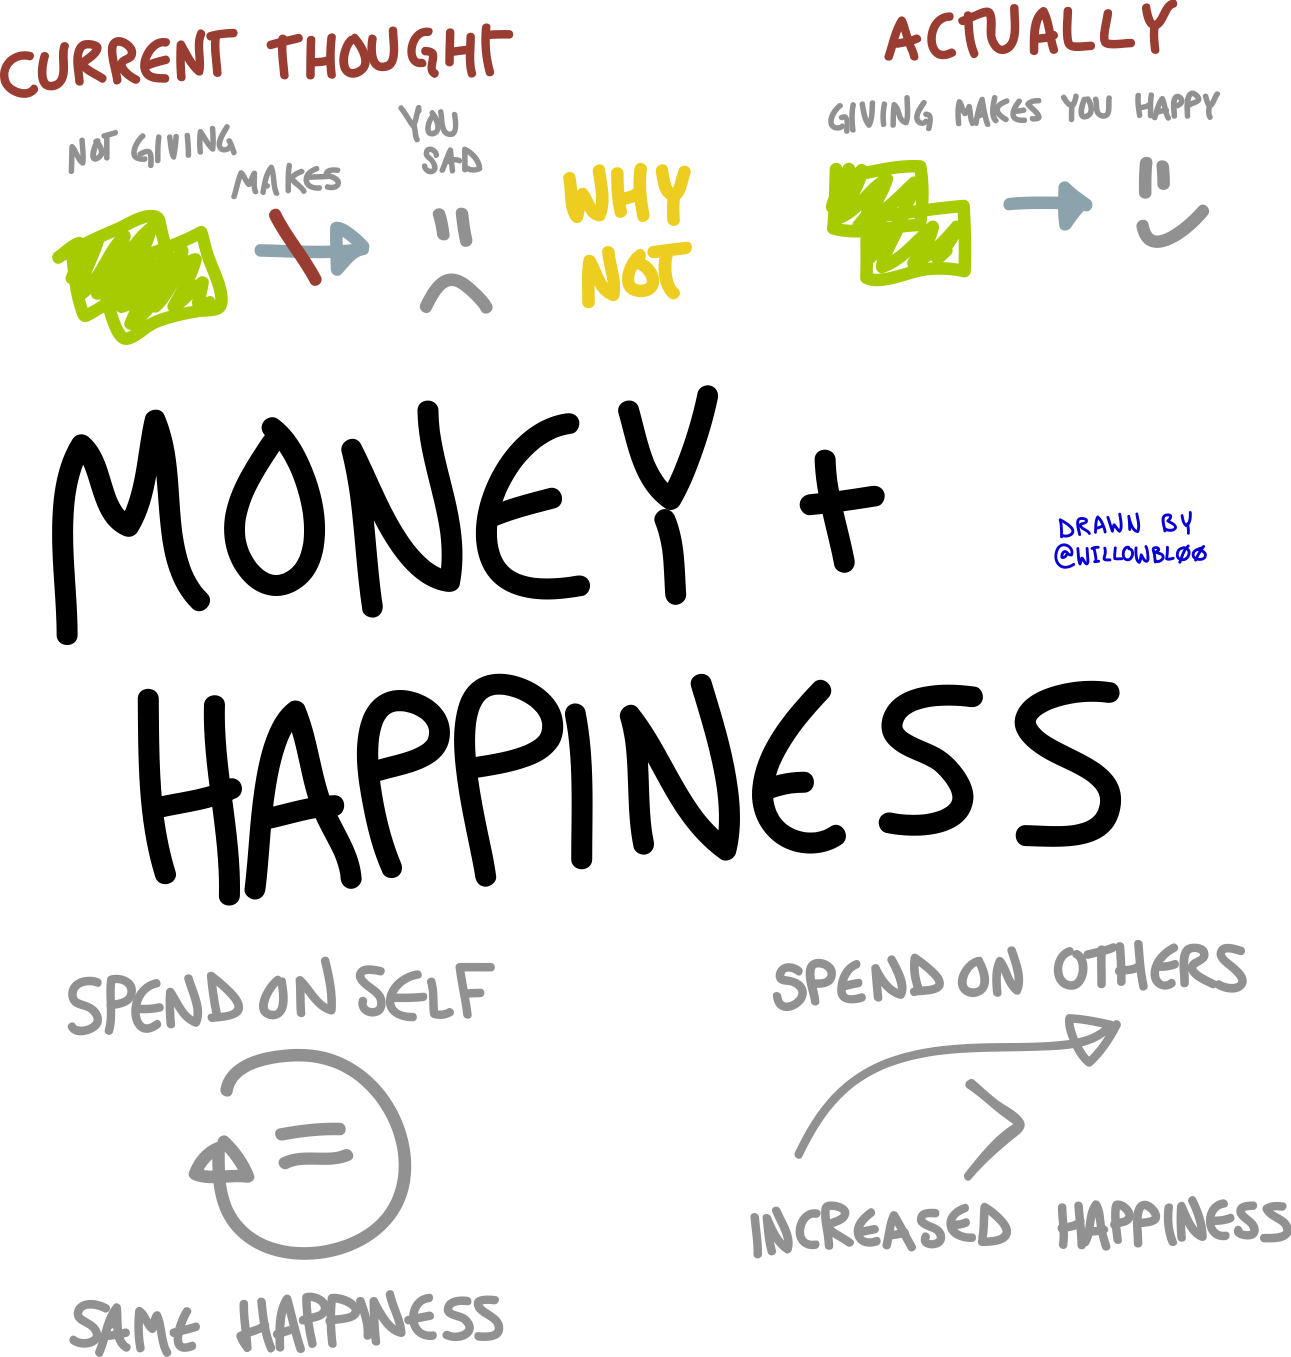 Money buys happiness?